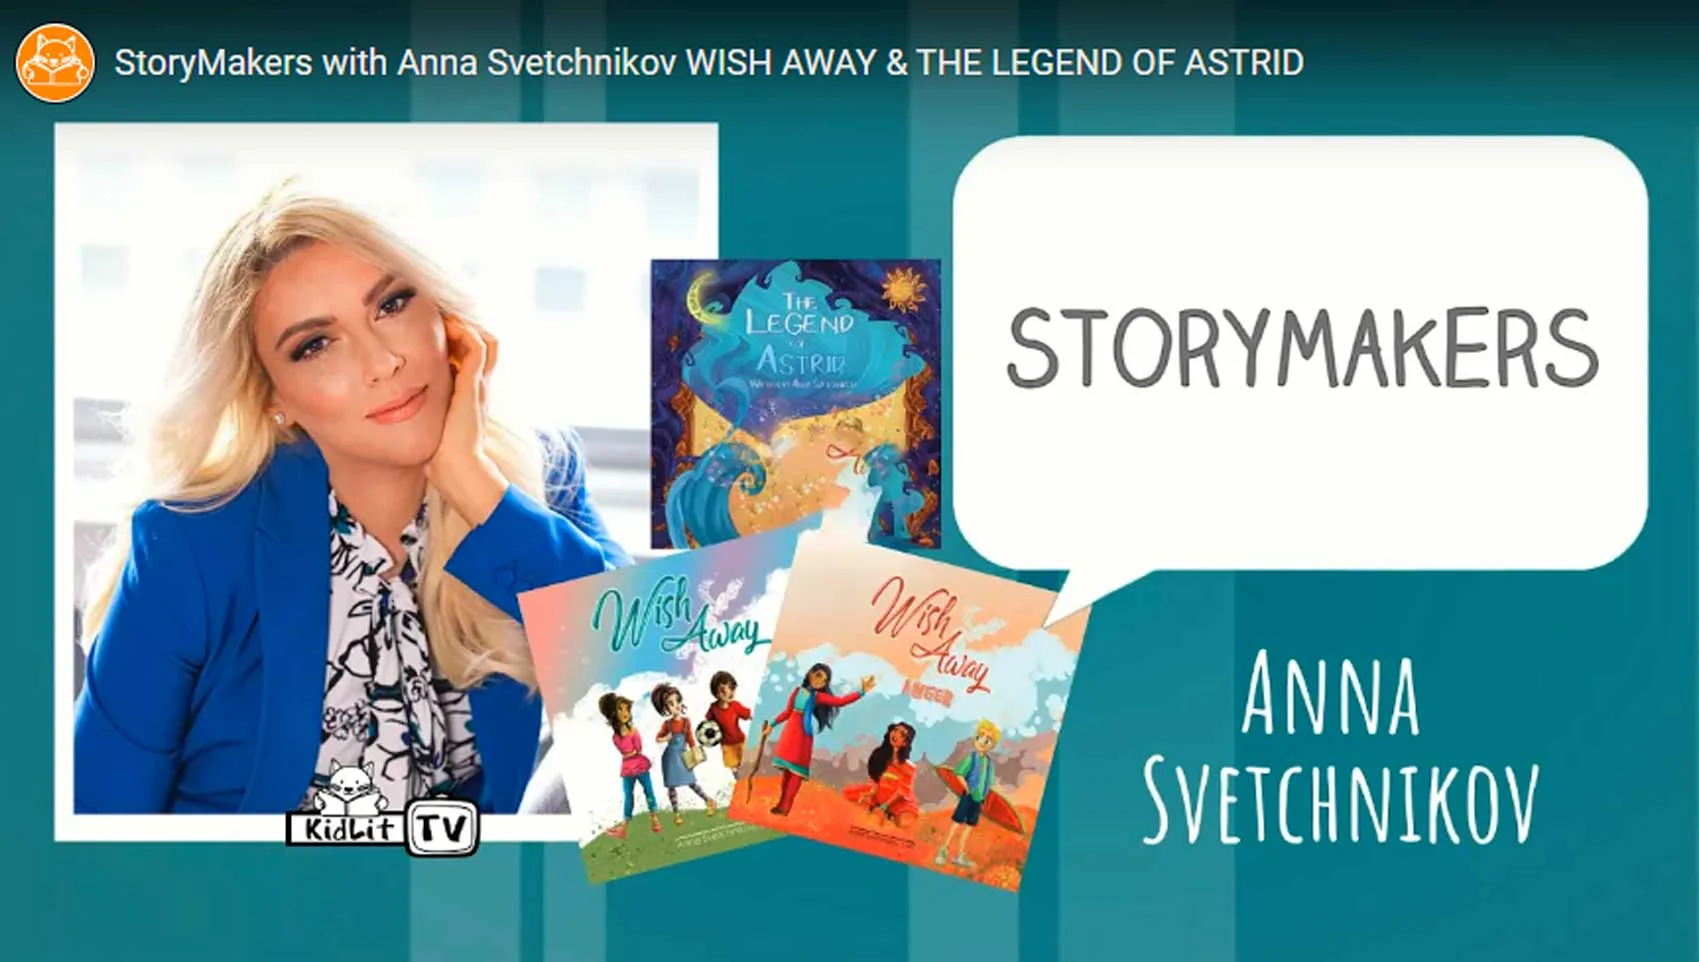 KidLitTV-Anna-Svetchnikov-Featured-Storymakers